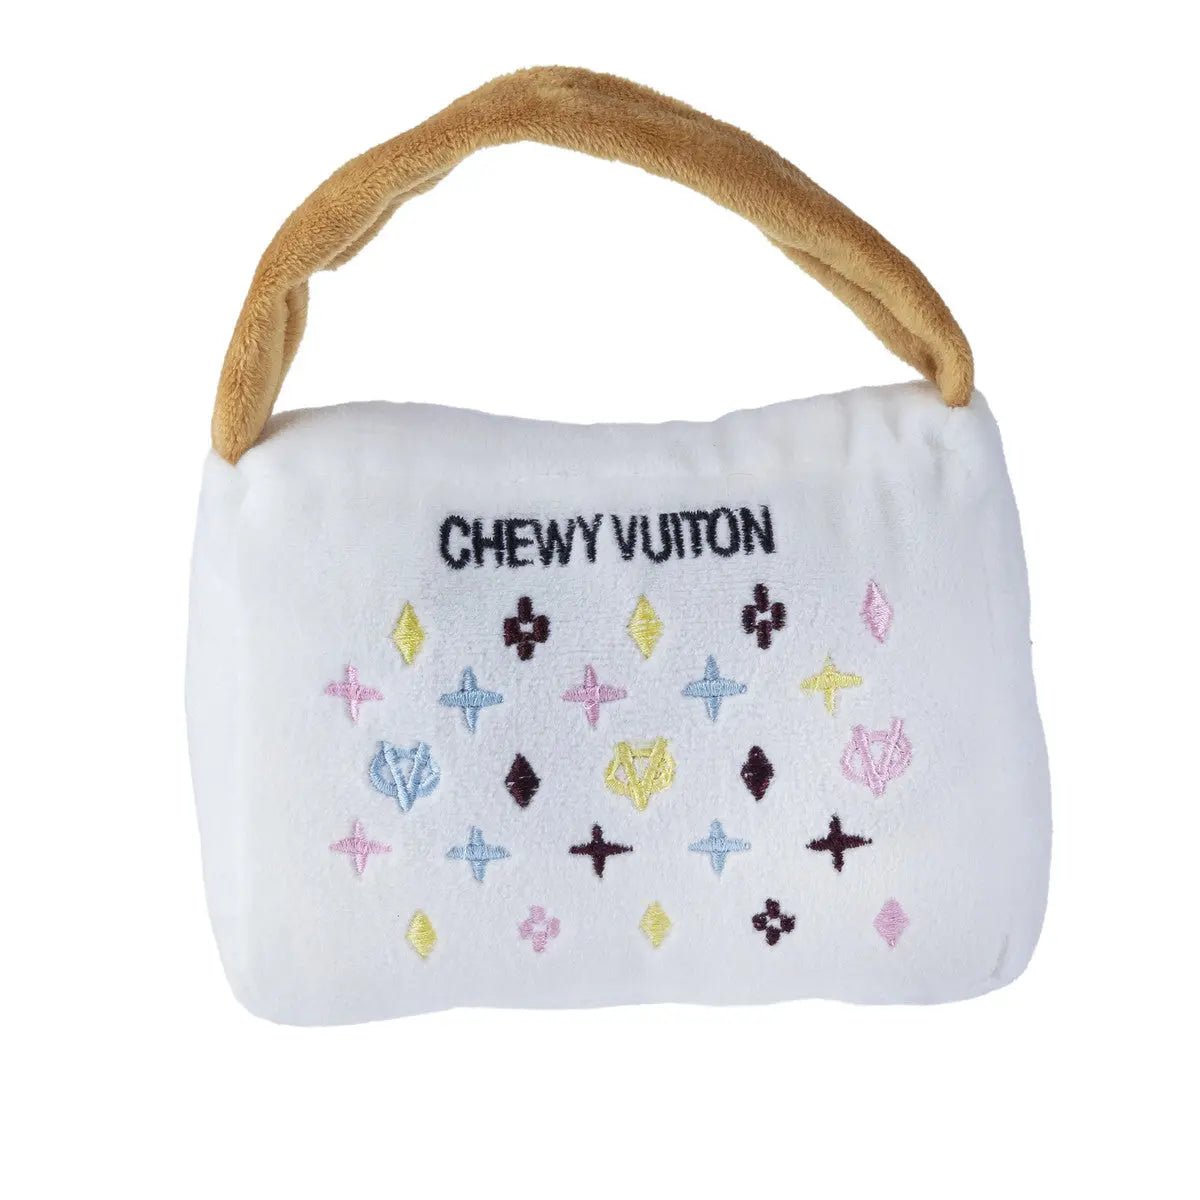 Haute Diggity Dog White Chewy Vuiton Handbag Plush Toys for Dogs Haute Diggity Dog